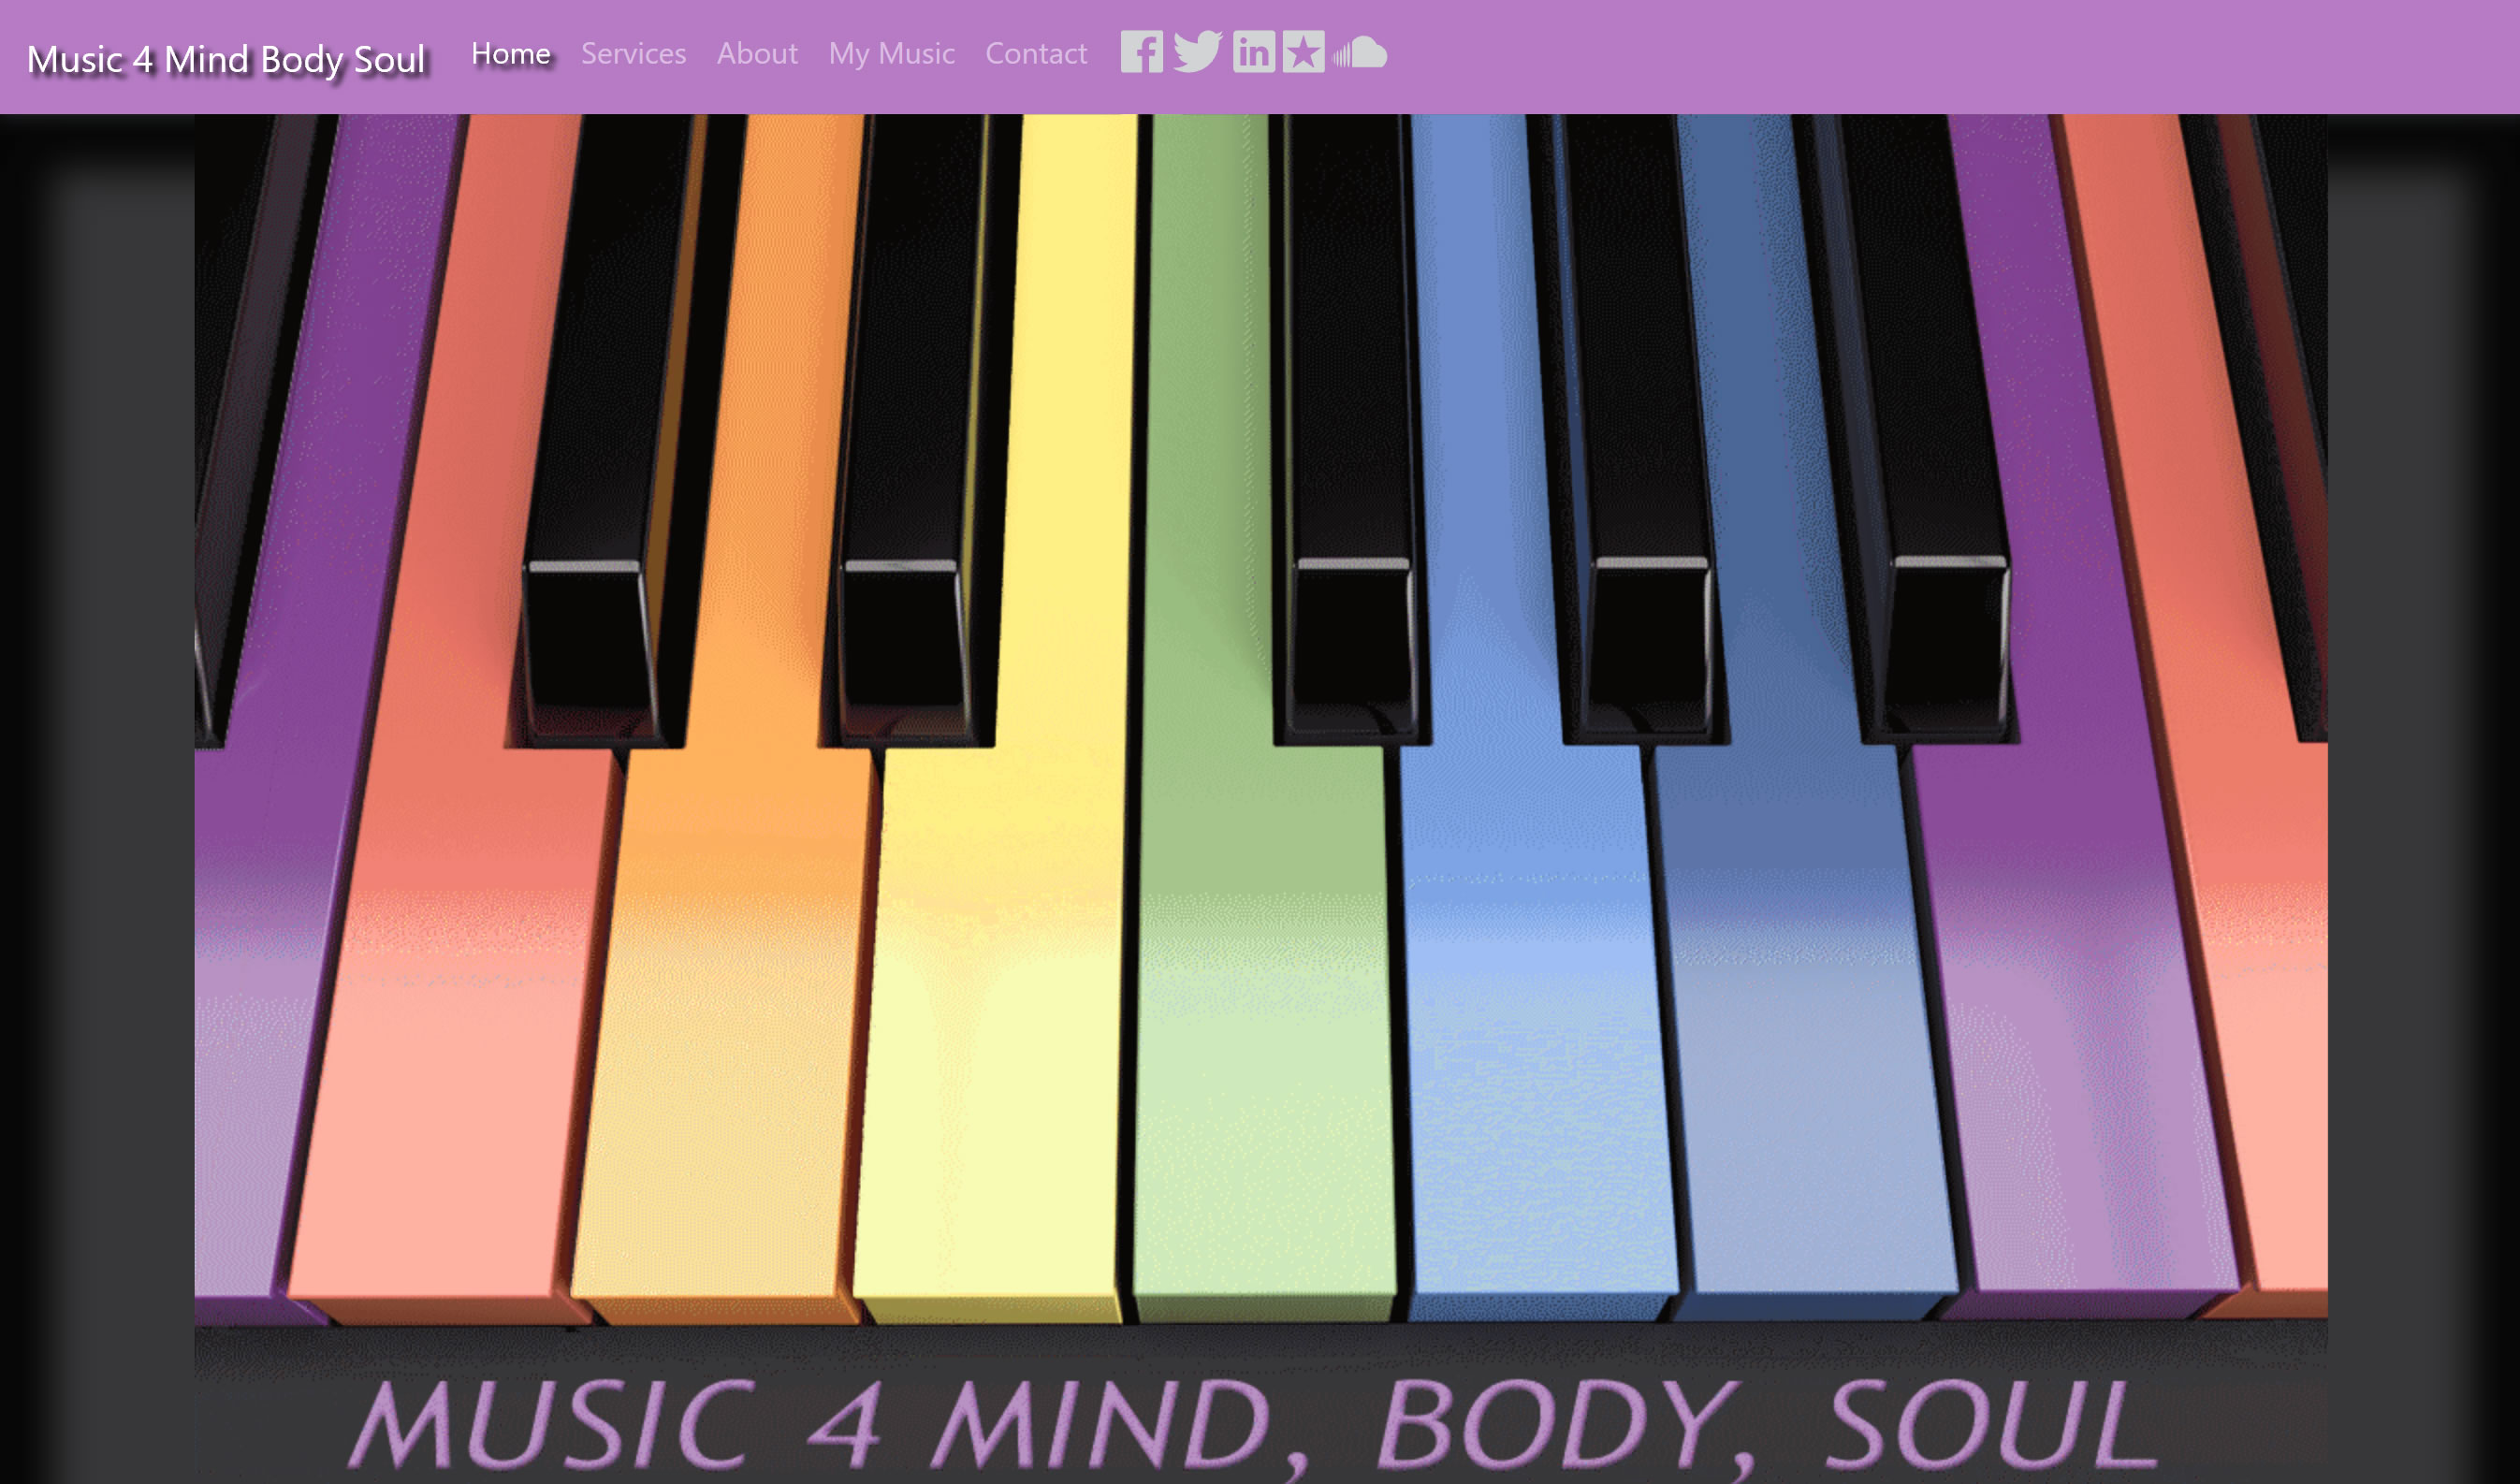 Music 4 Mind, Body, Soul website